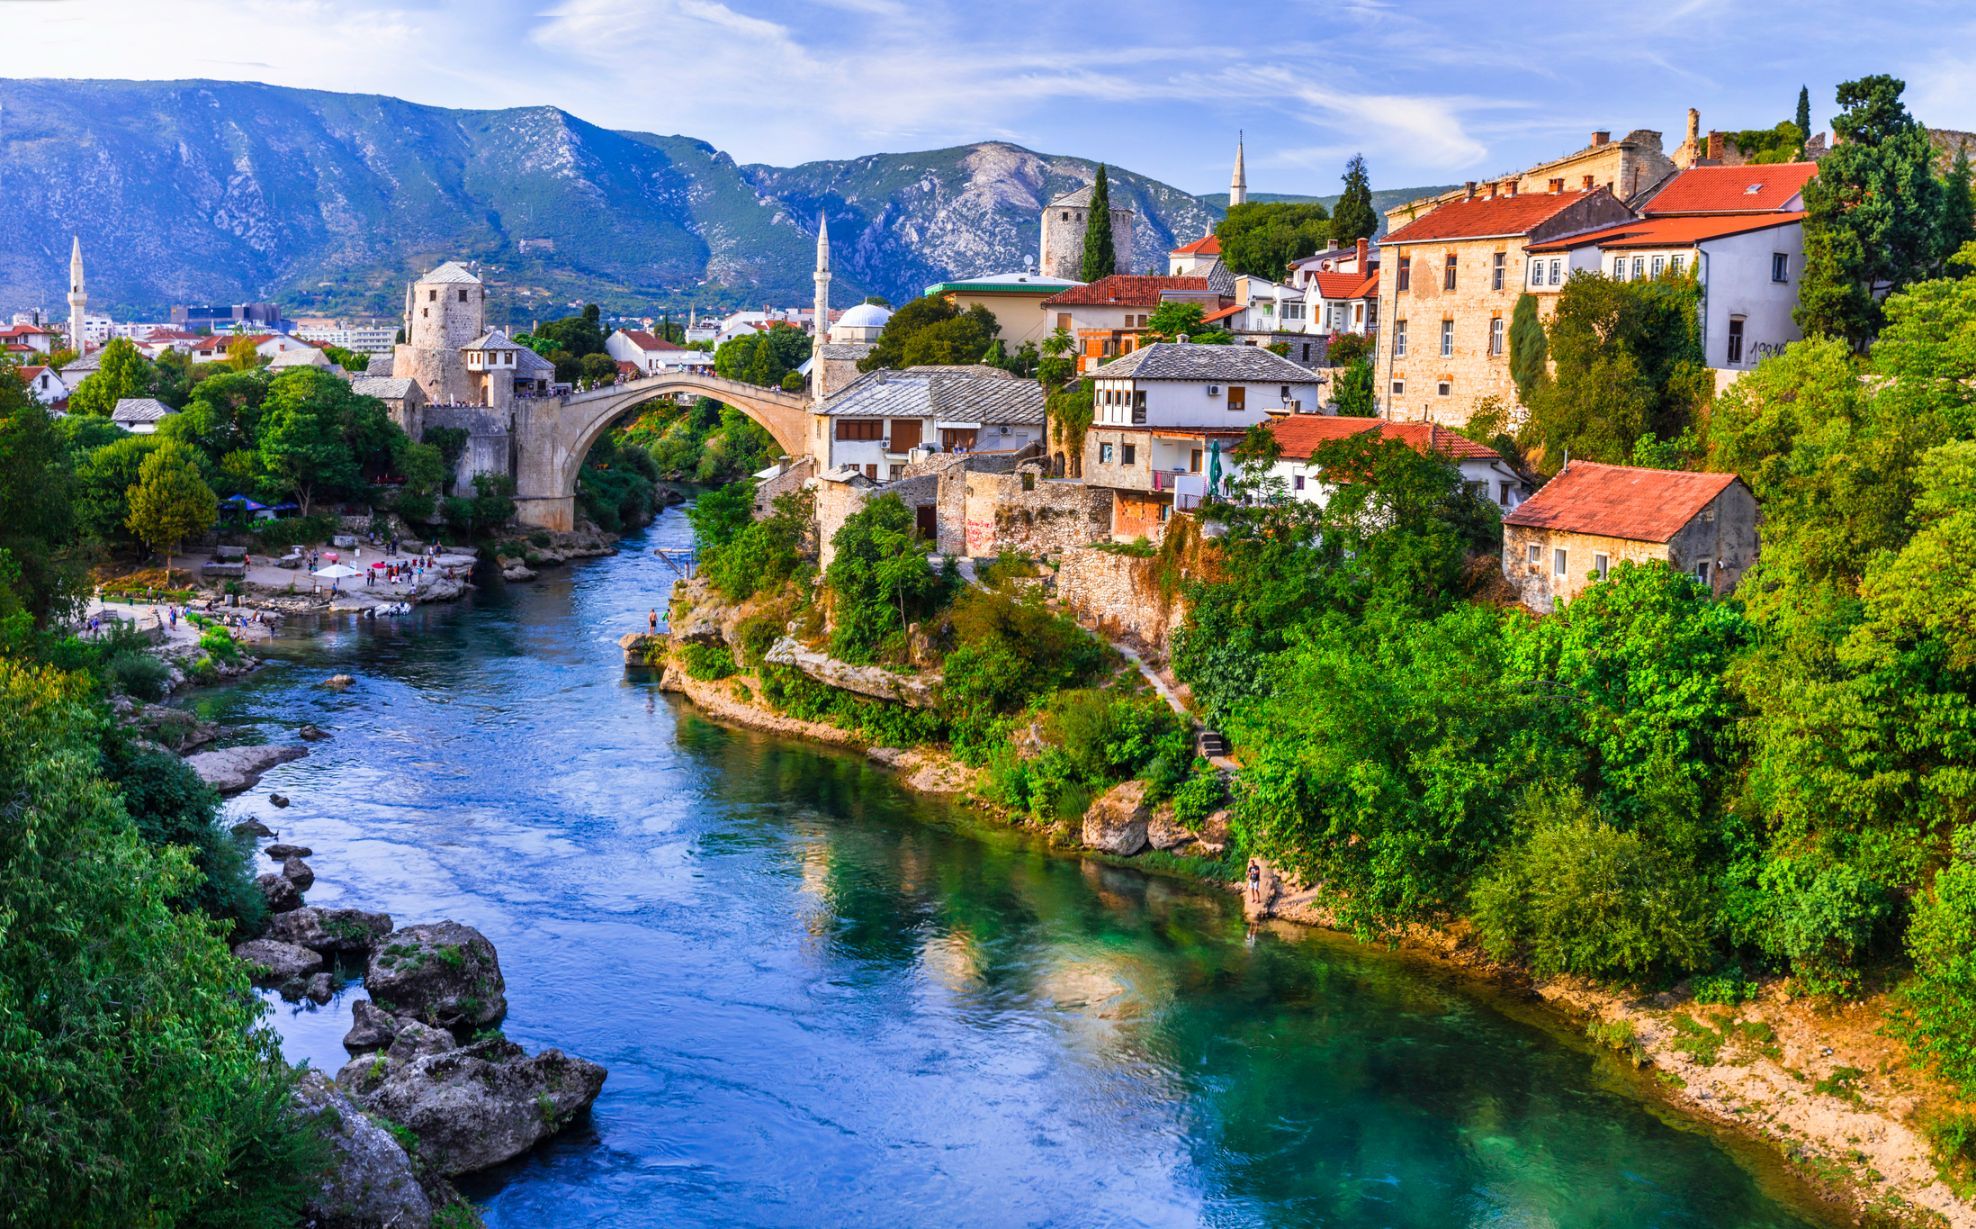 The Stari Most, crossing the Neretva River in beautiful Mostar